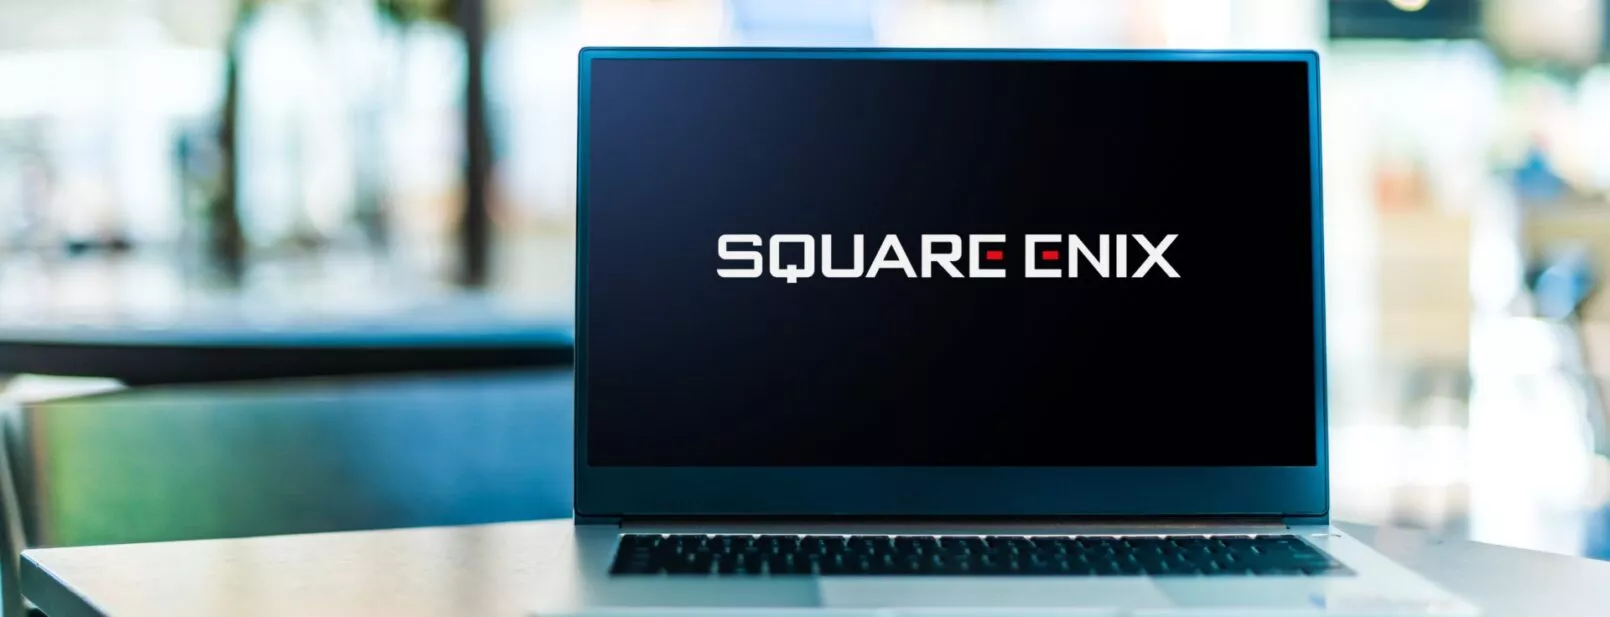 Square Enix Logo on Laptop